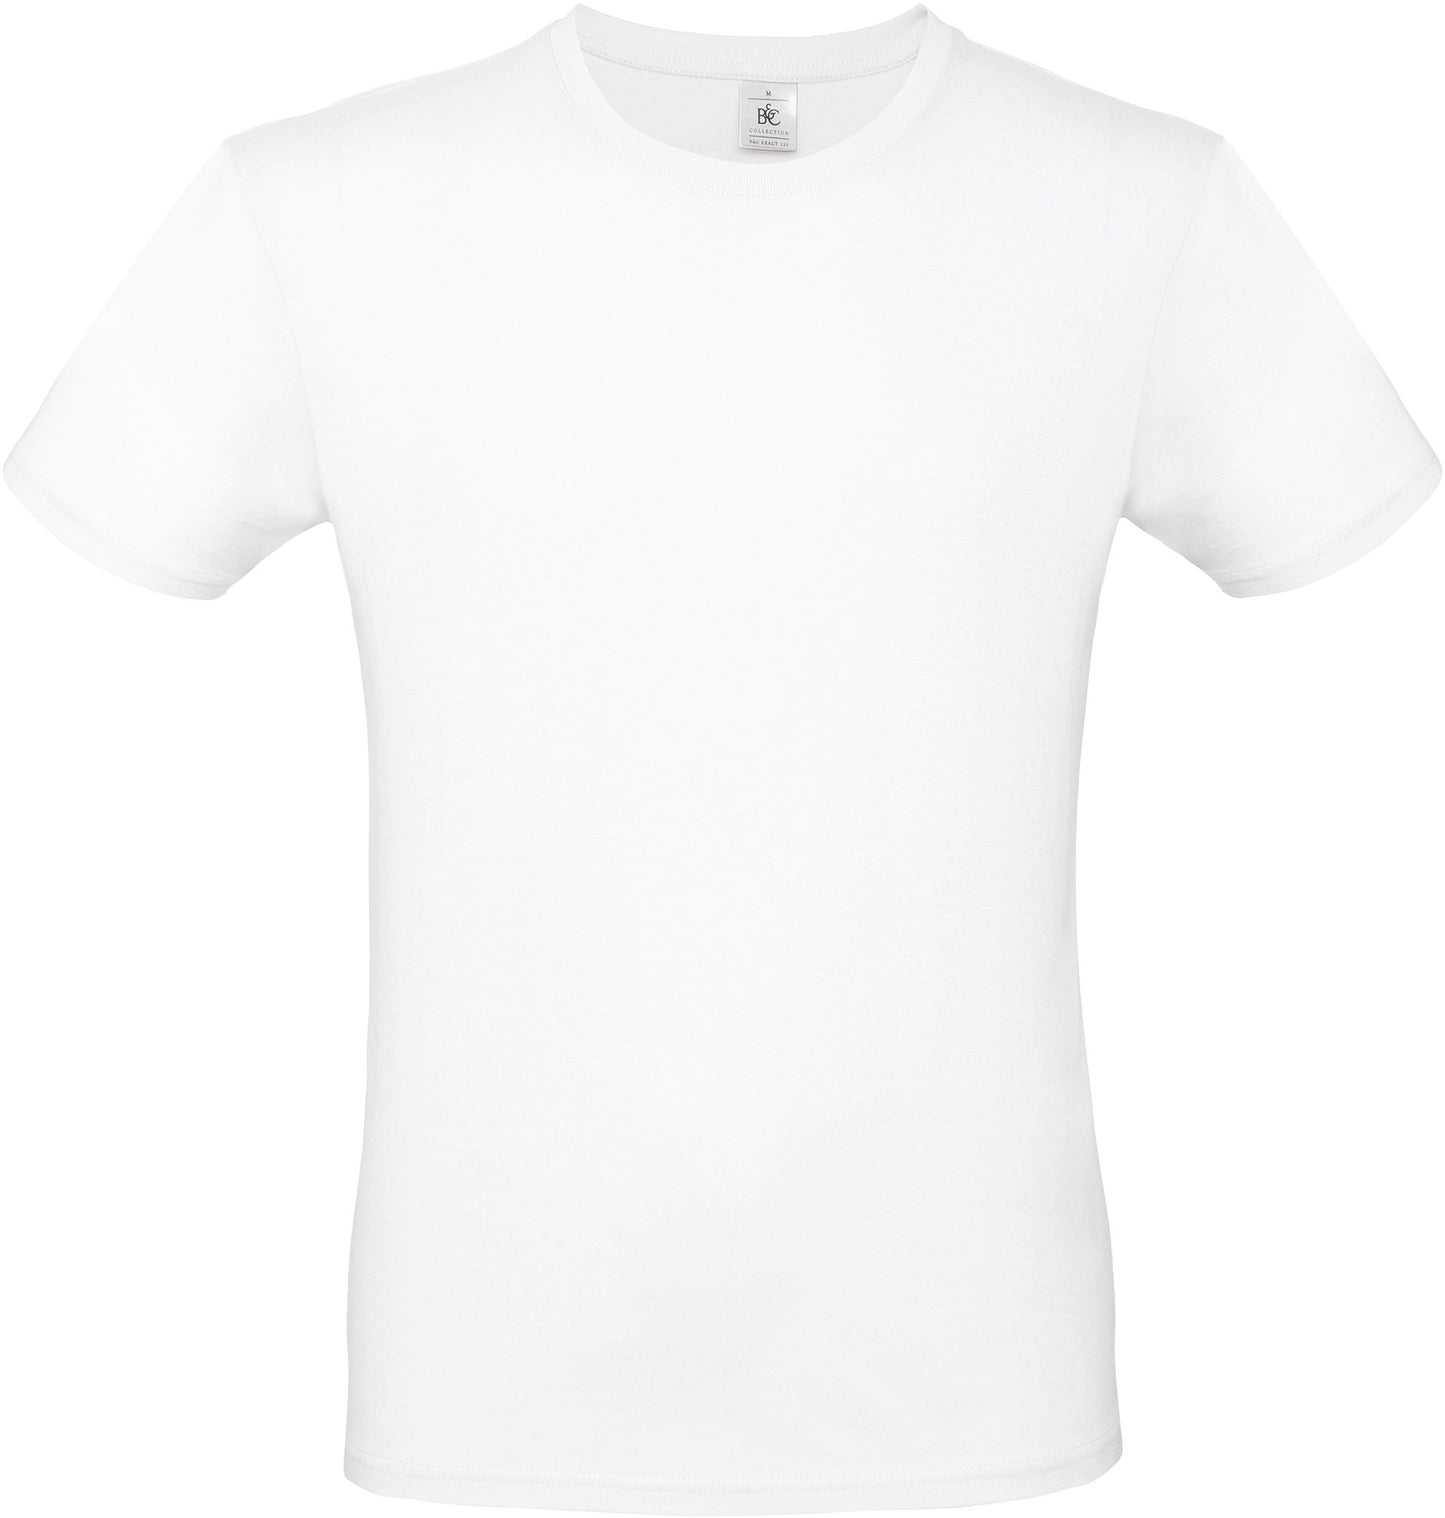 E150 Men's T-shirt